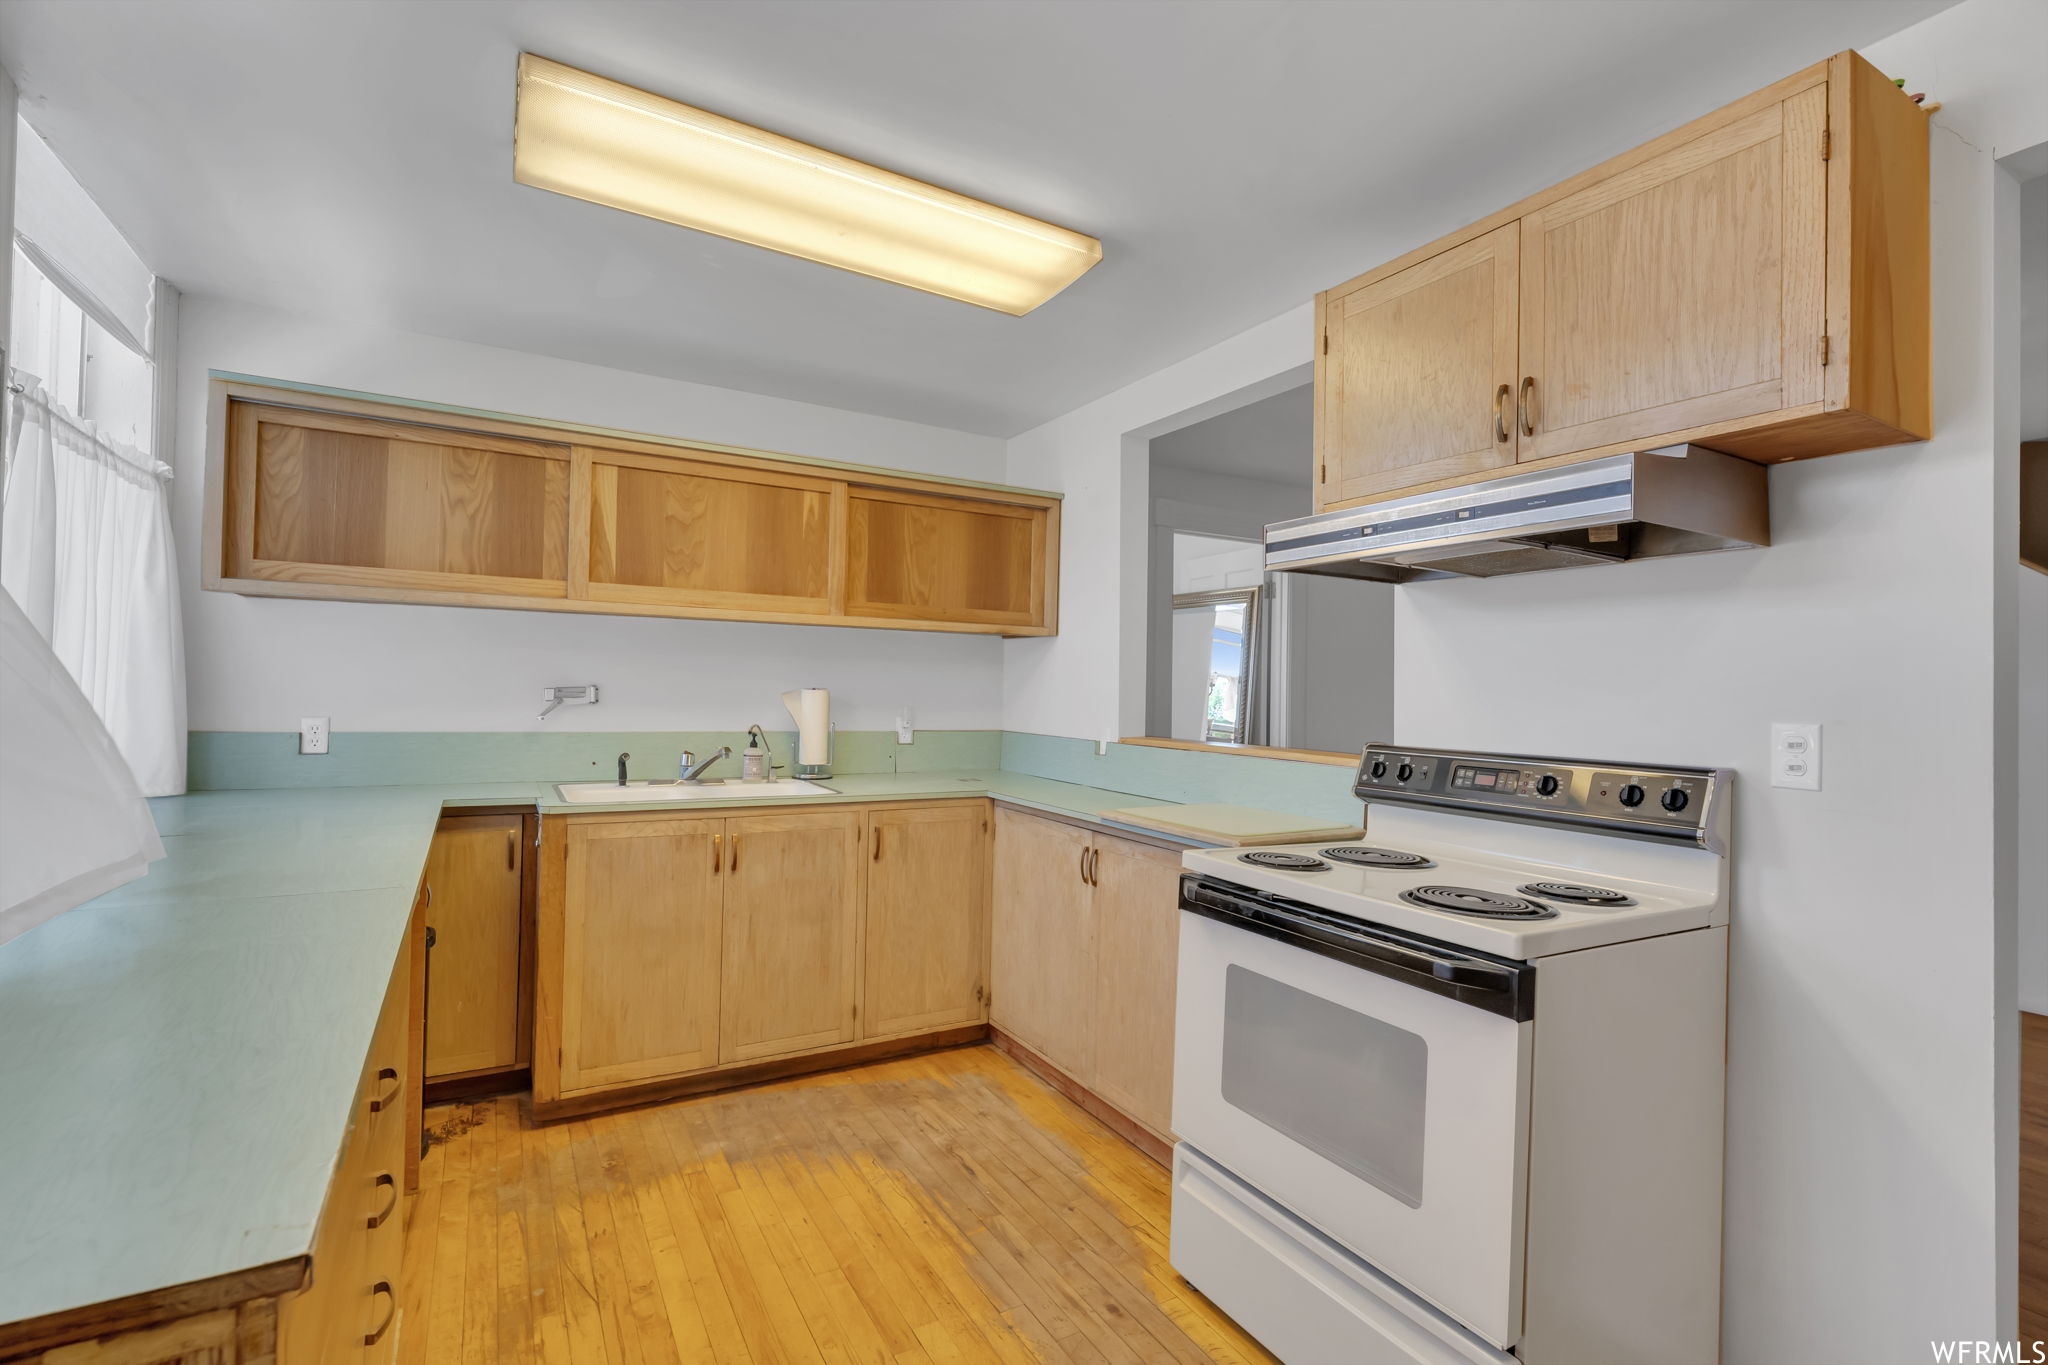 Kitchen featuring light hardwood floors, light countertops, range hood, and white electric range oven